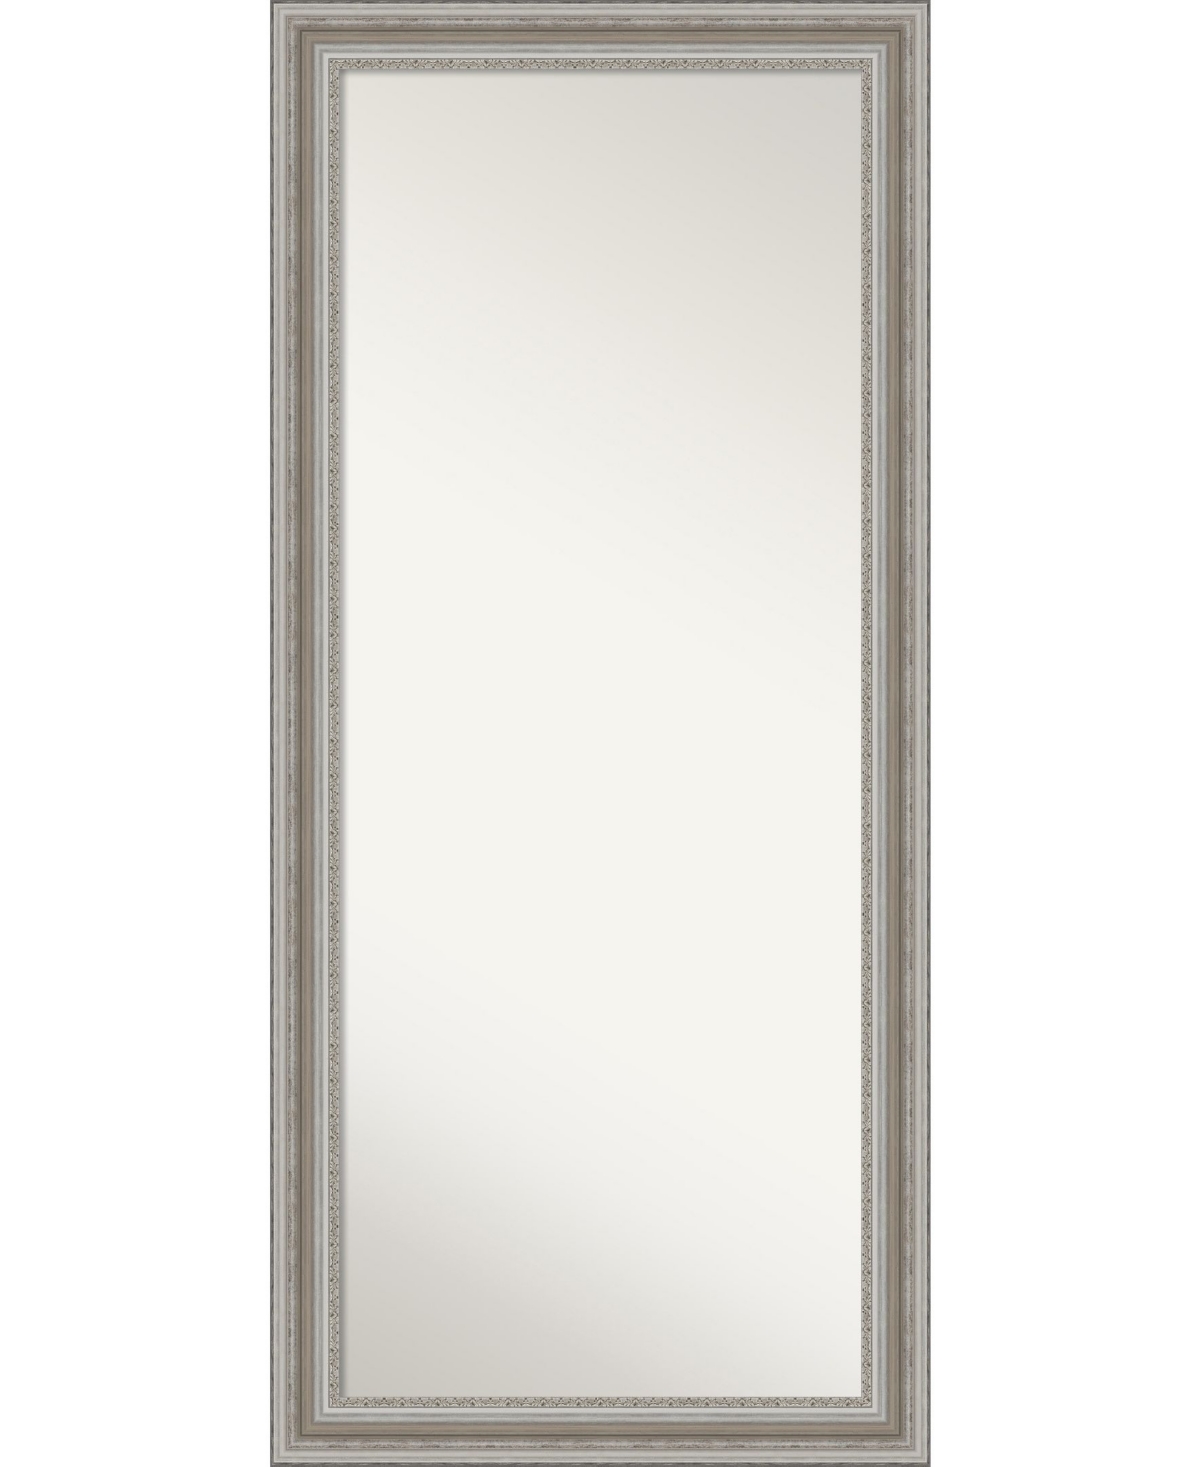 Parlor Silver-tone Framed Floor/Leaner Full Length Mirror, 29.5" x 65.50" - Silver